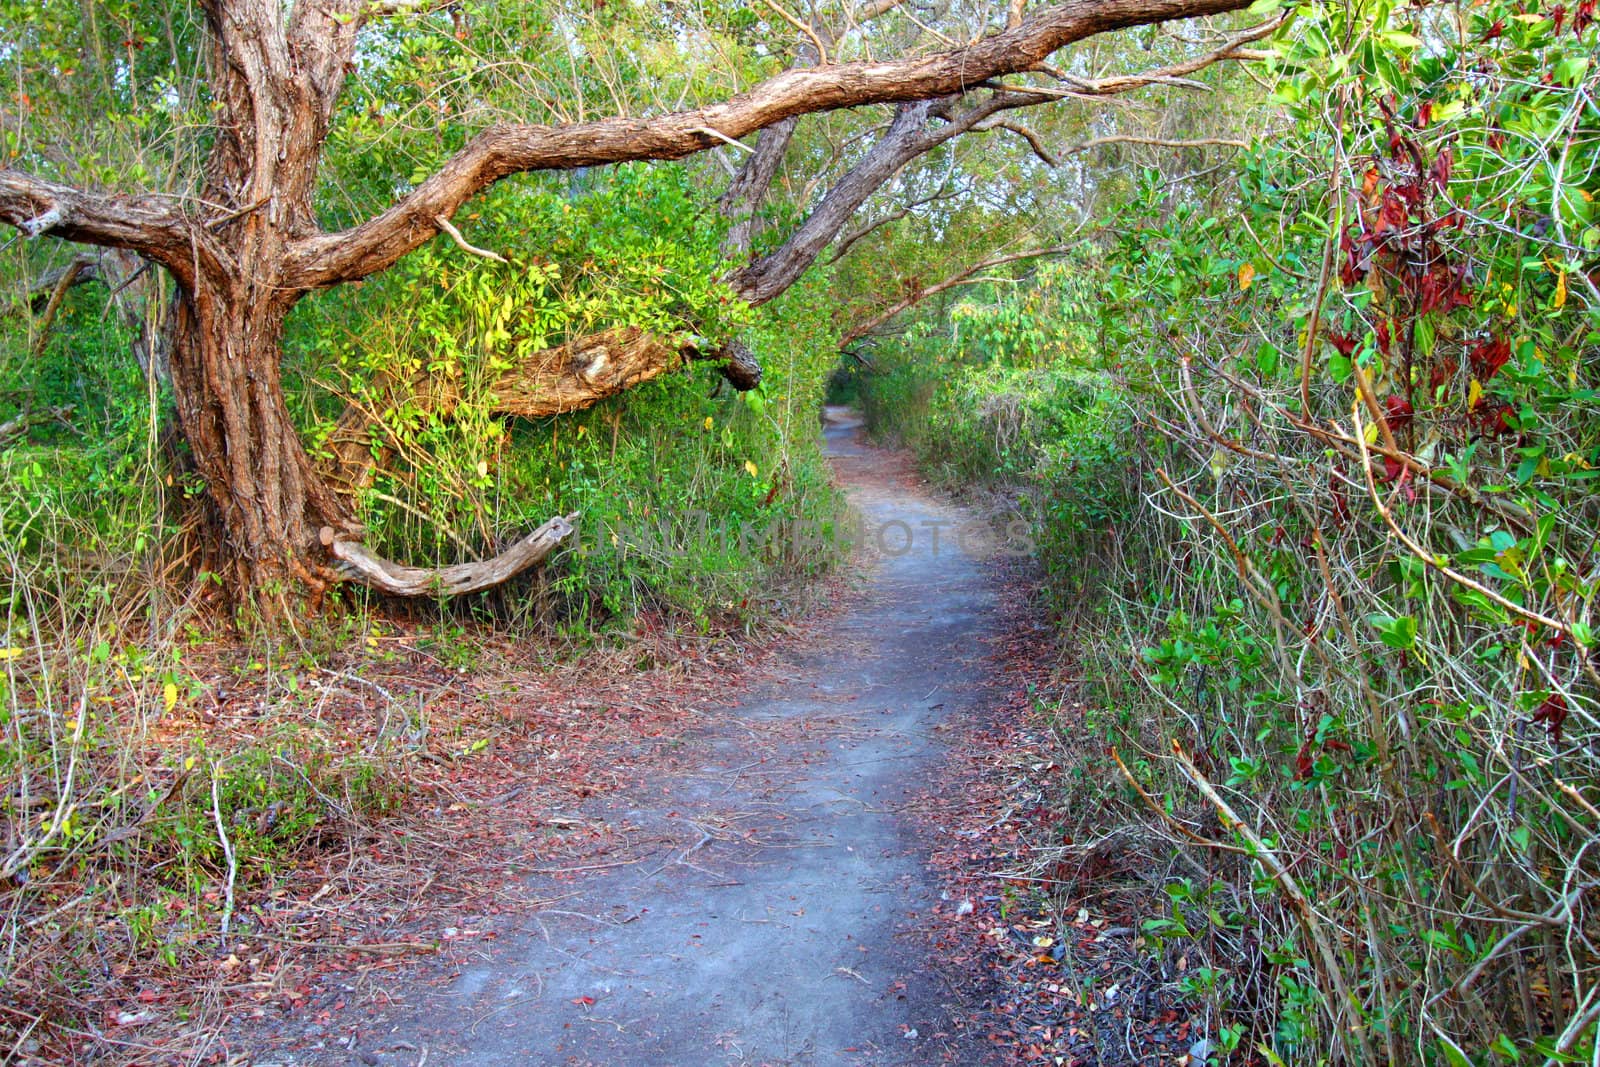 Coastal Prairie Trail and dense vegetation at Everglades National Park of Florida.